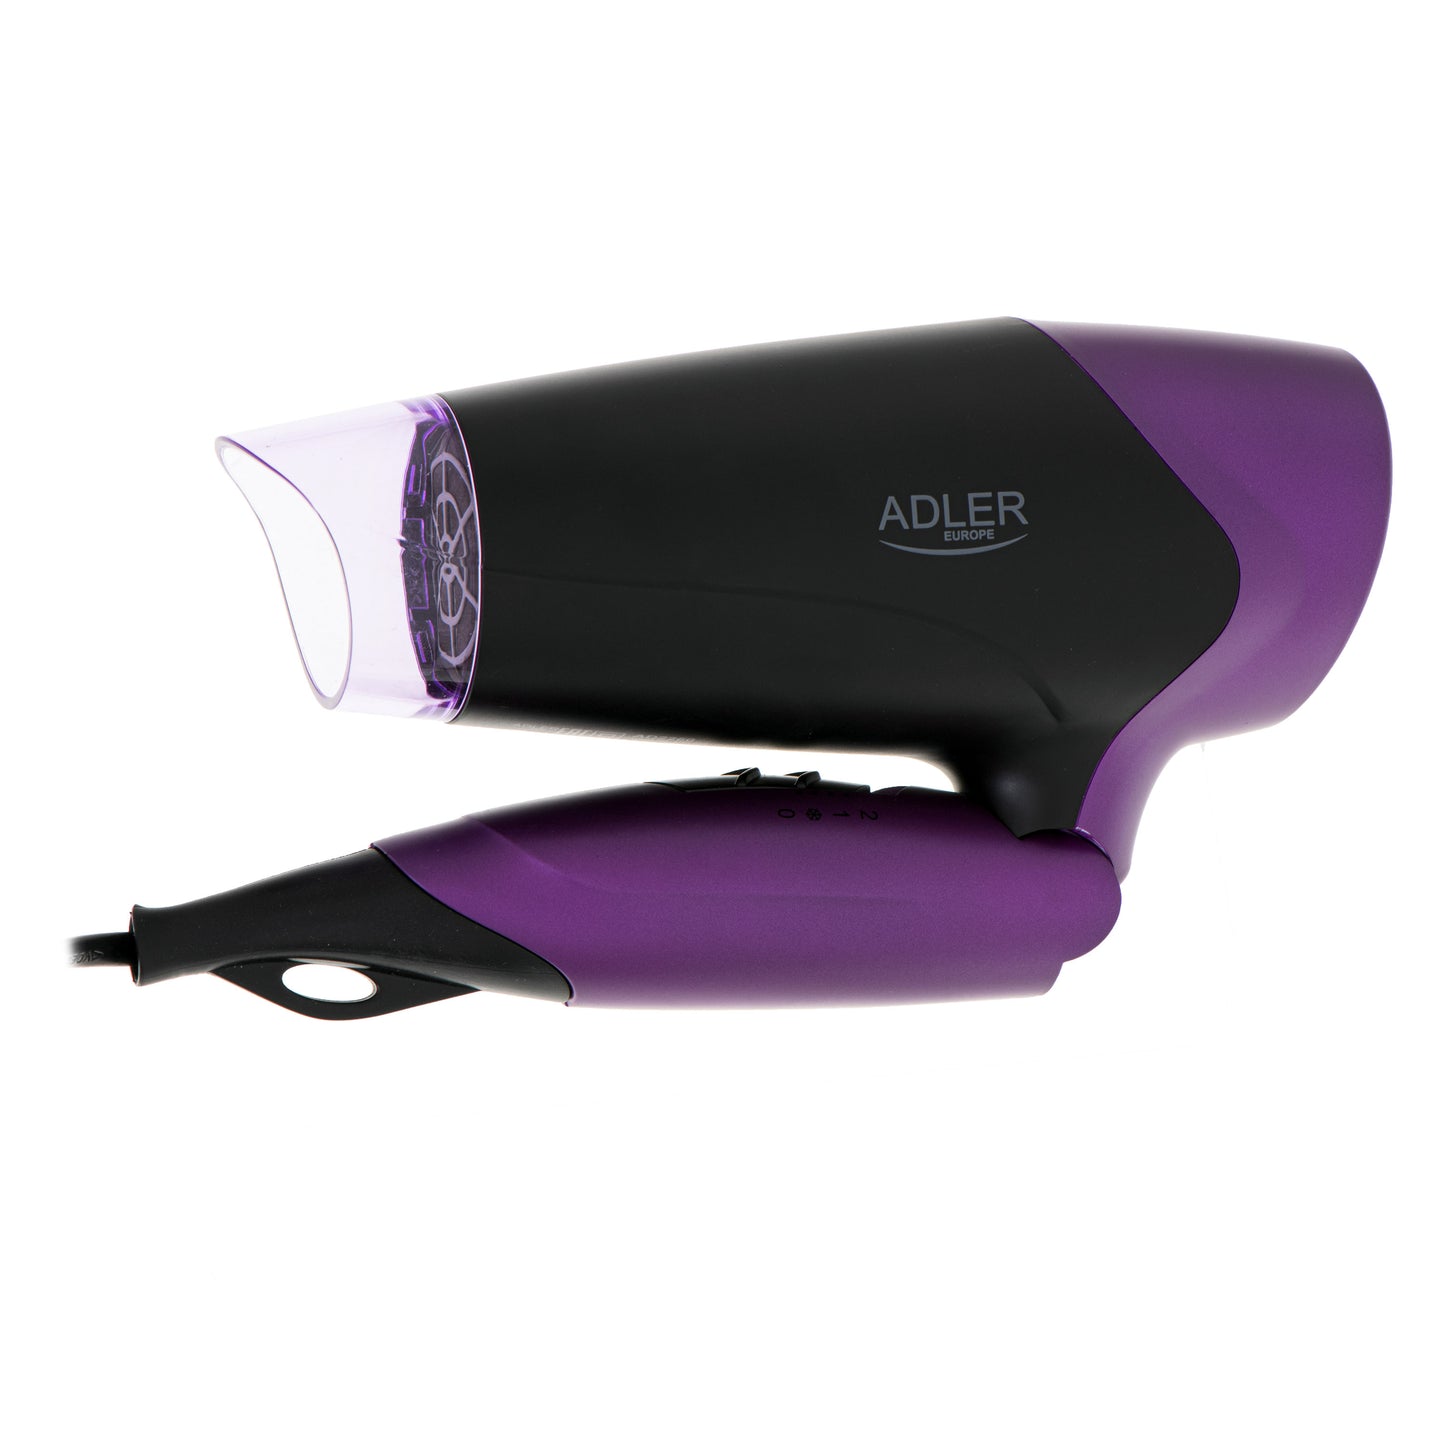 Secador de cabelo Adler AD2260 (1600w)